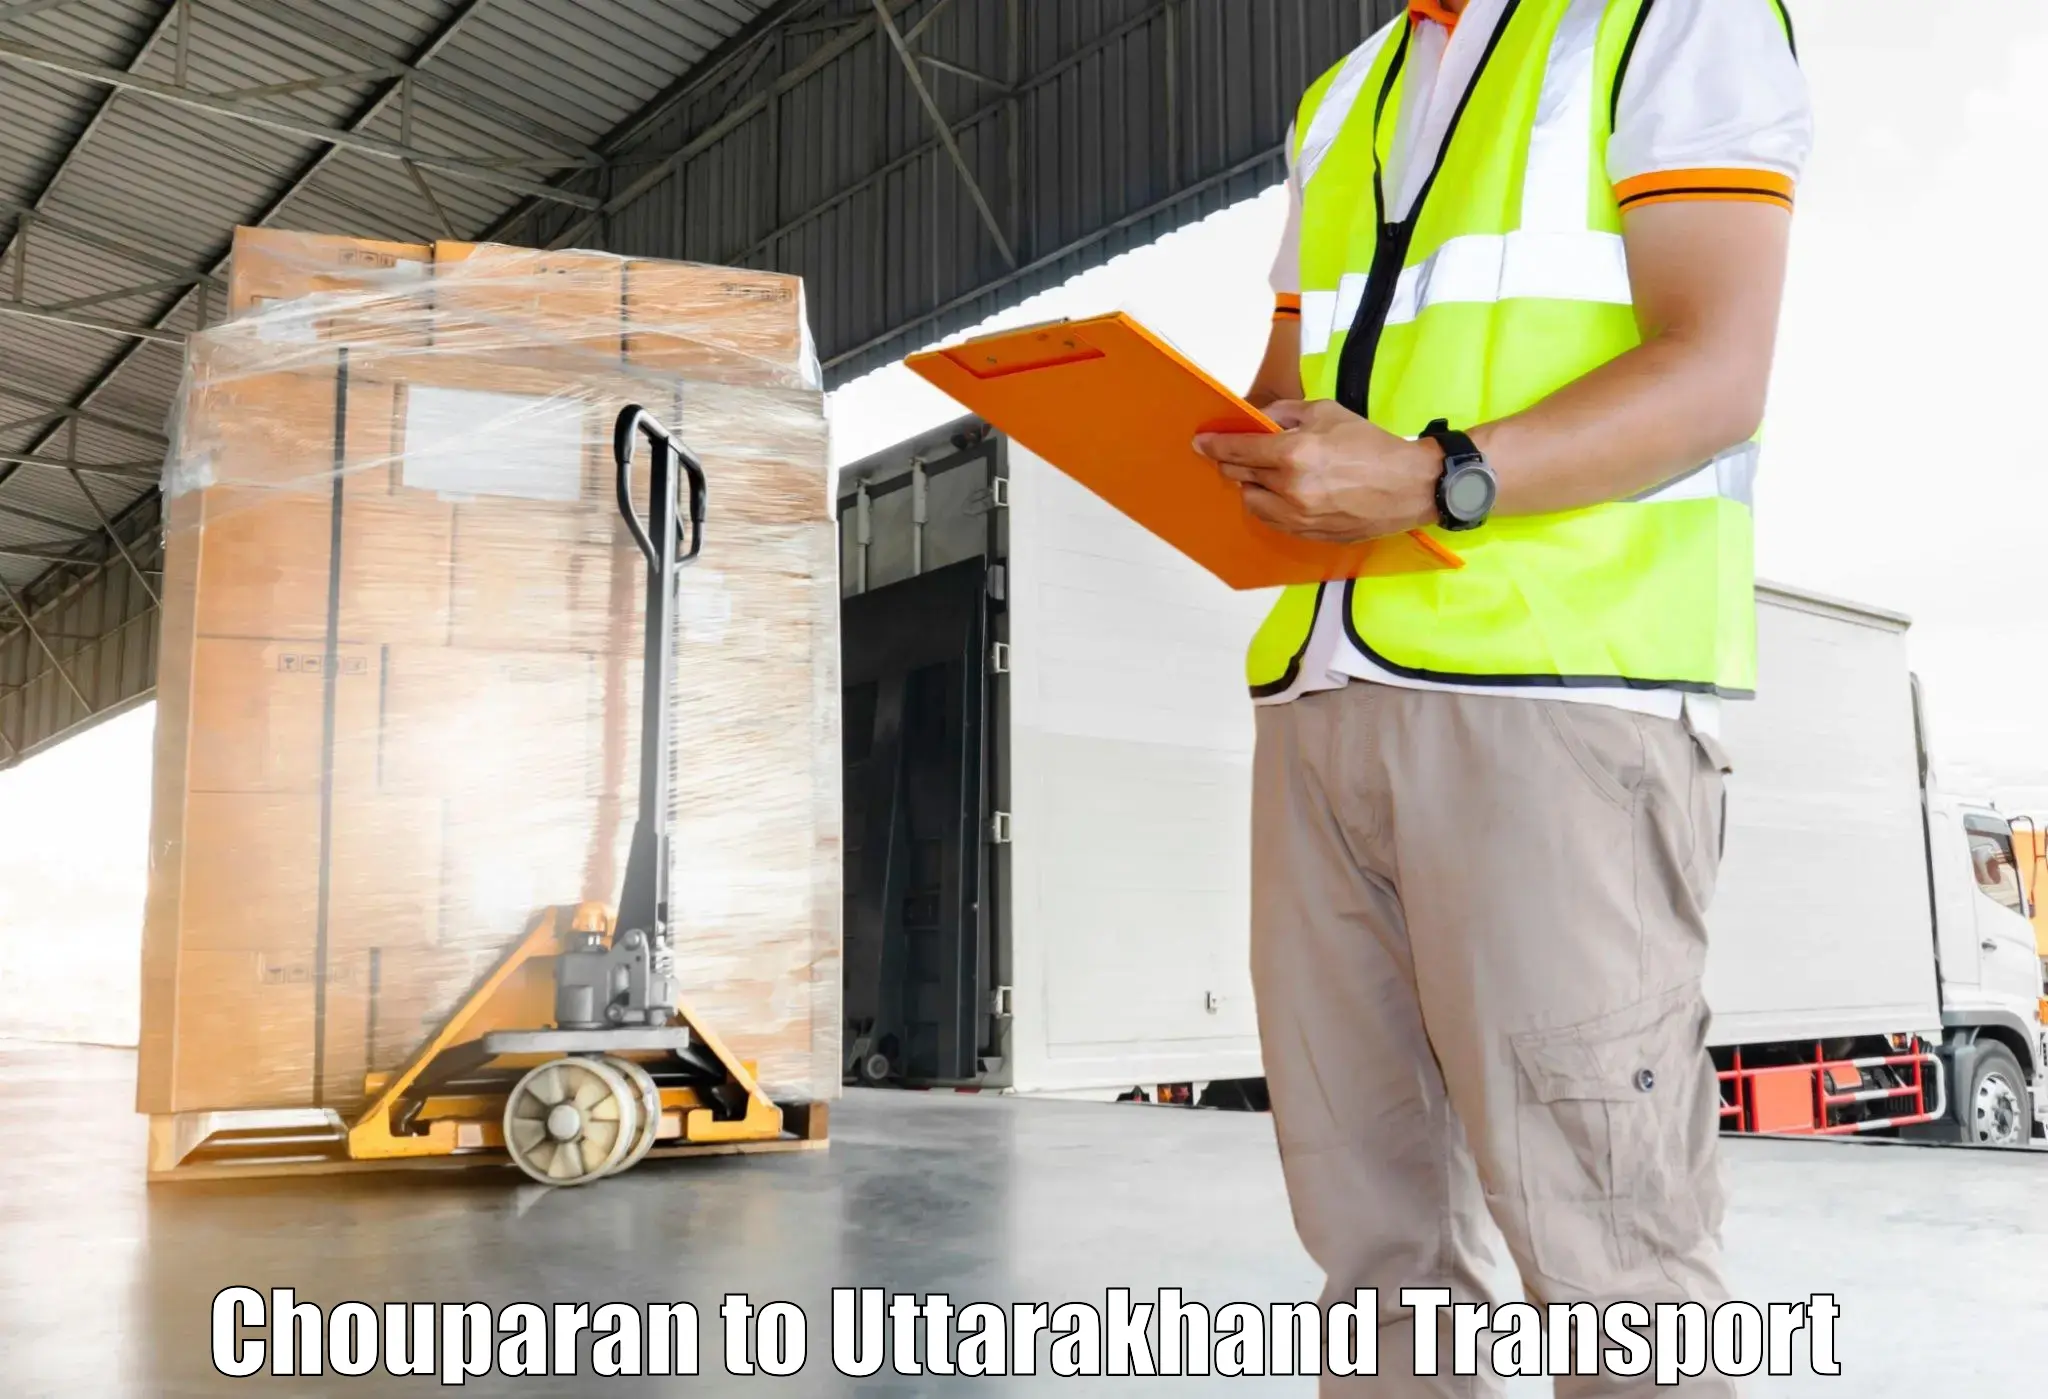 Furniture transport service Chouparan to Paithani